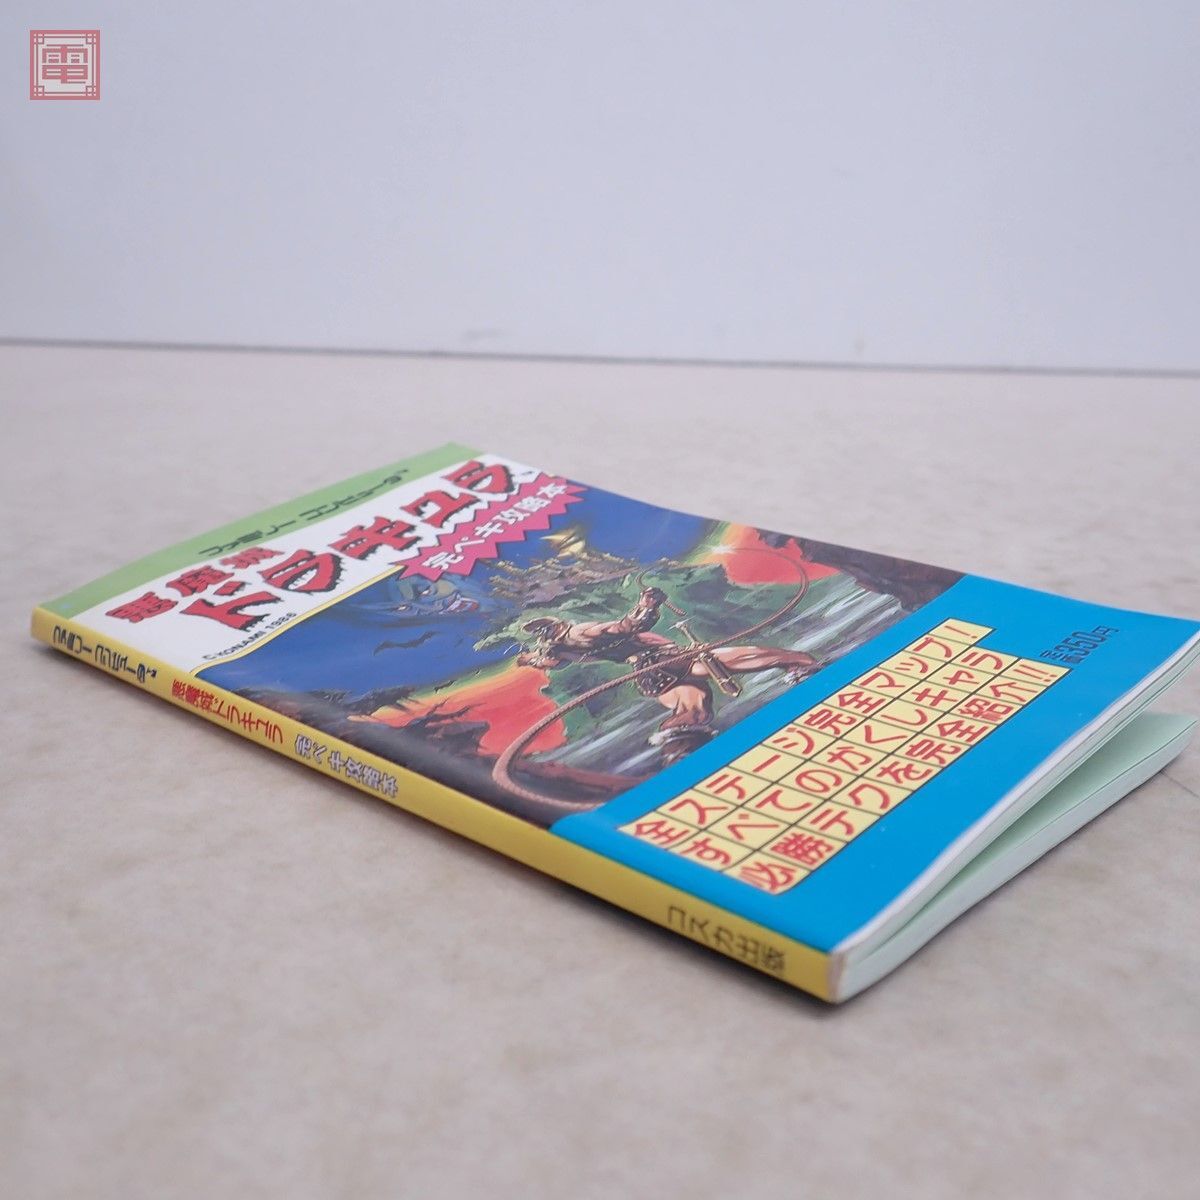  capture book FC Famicom demon castle gong kyula.peki capture book ko ska publish Konami KONAMI[PP